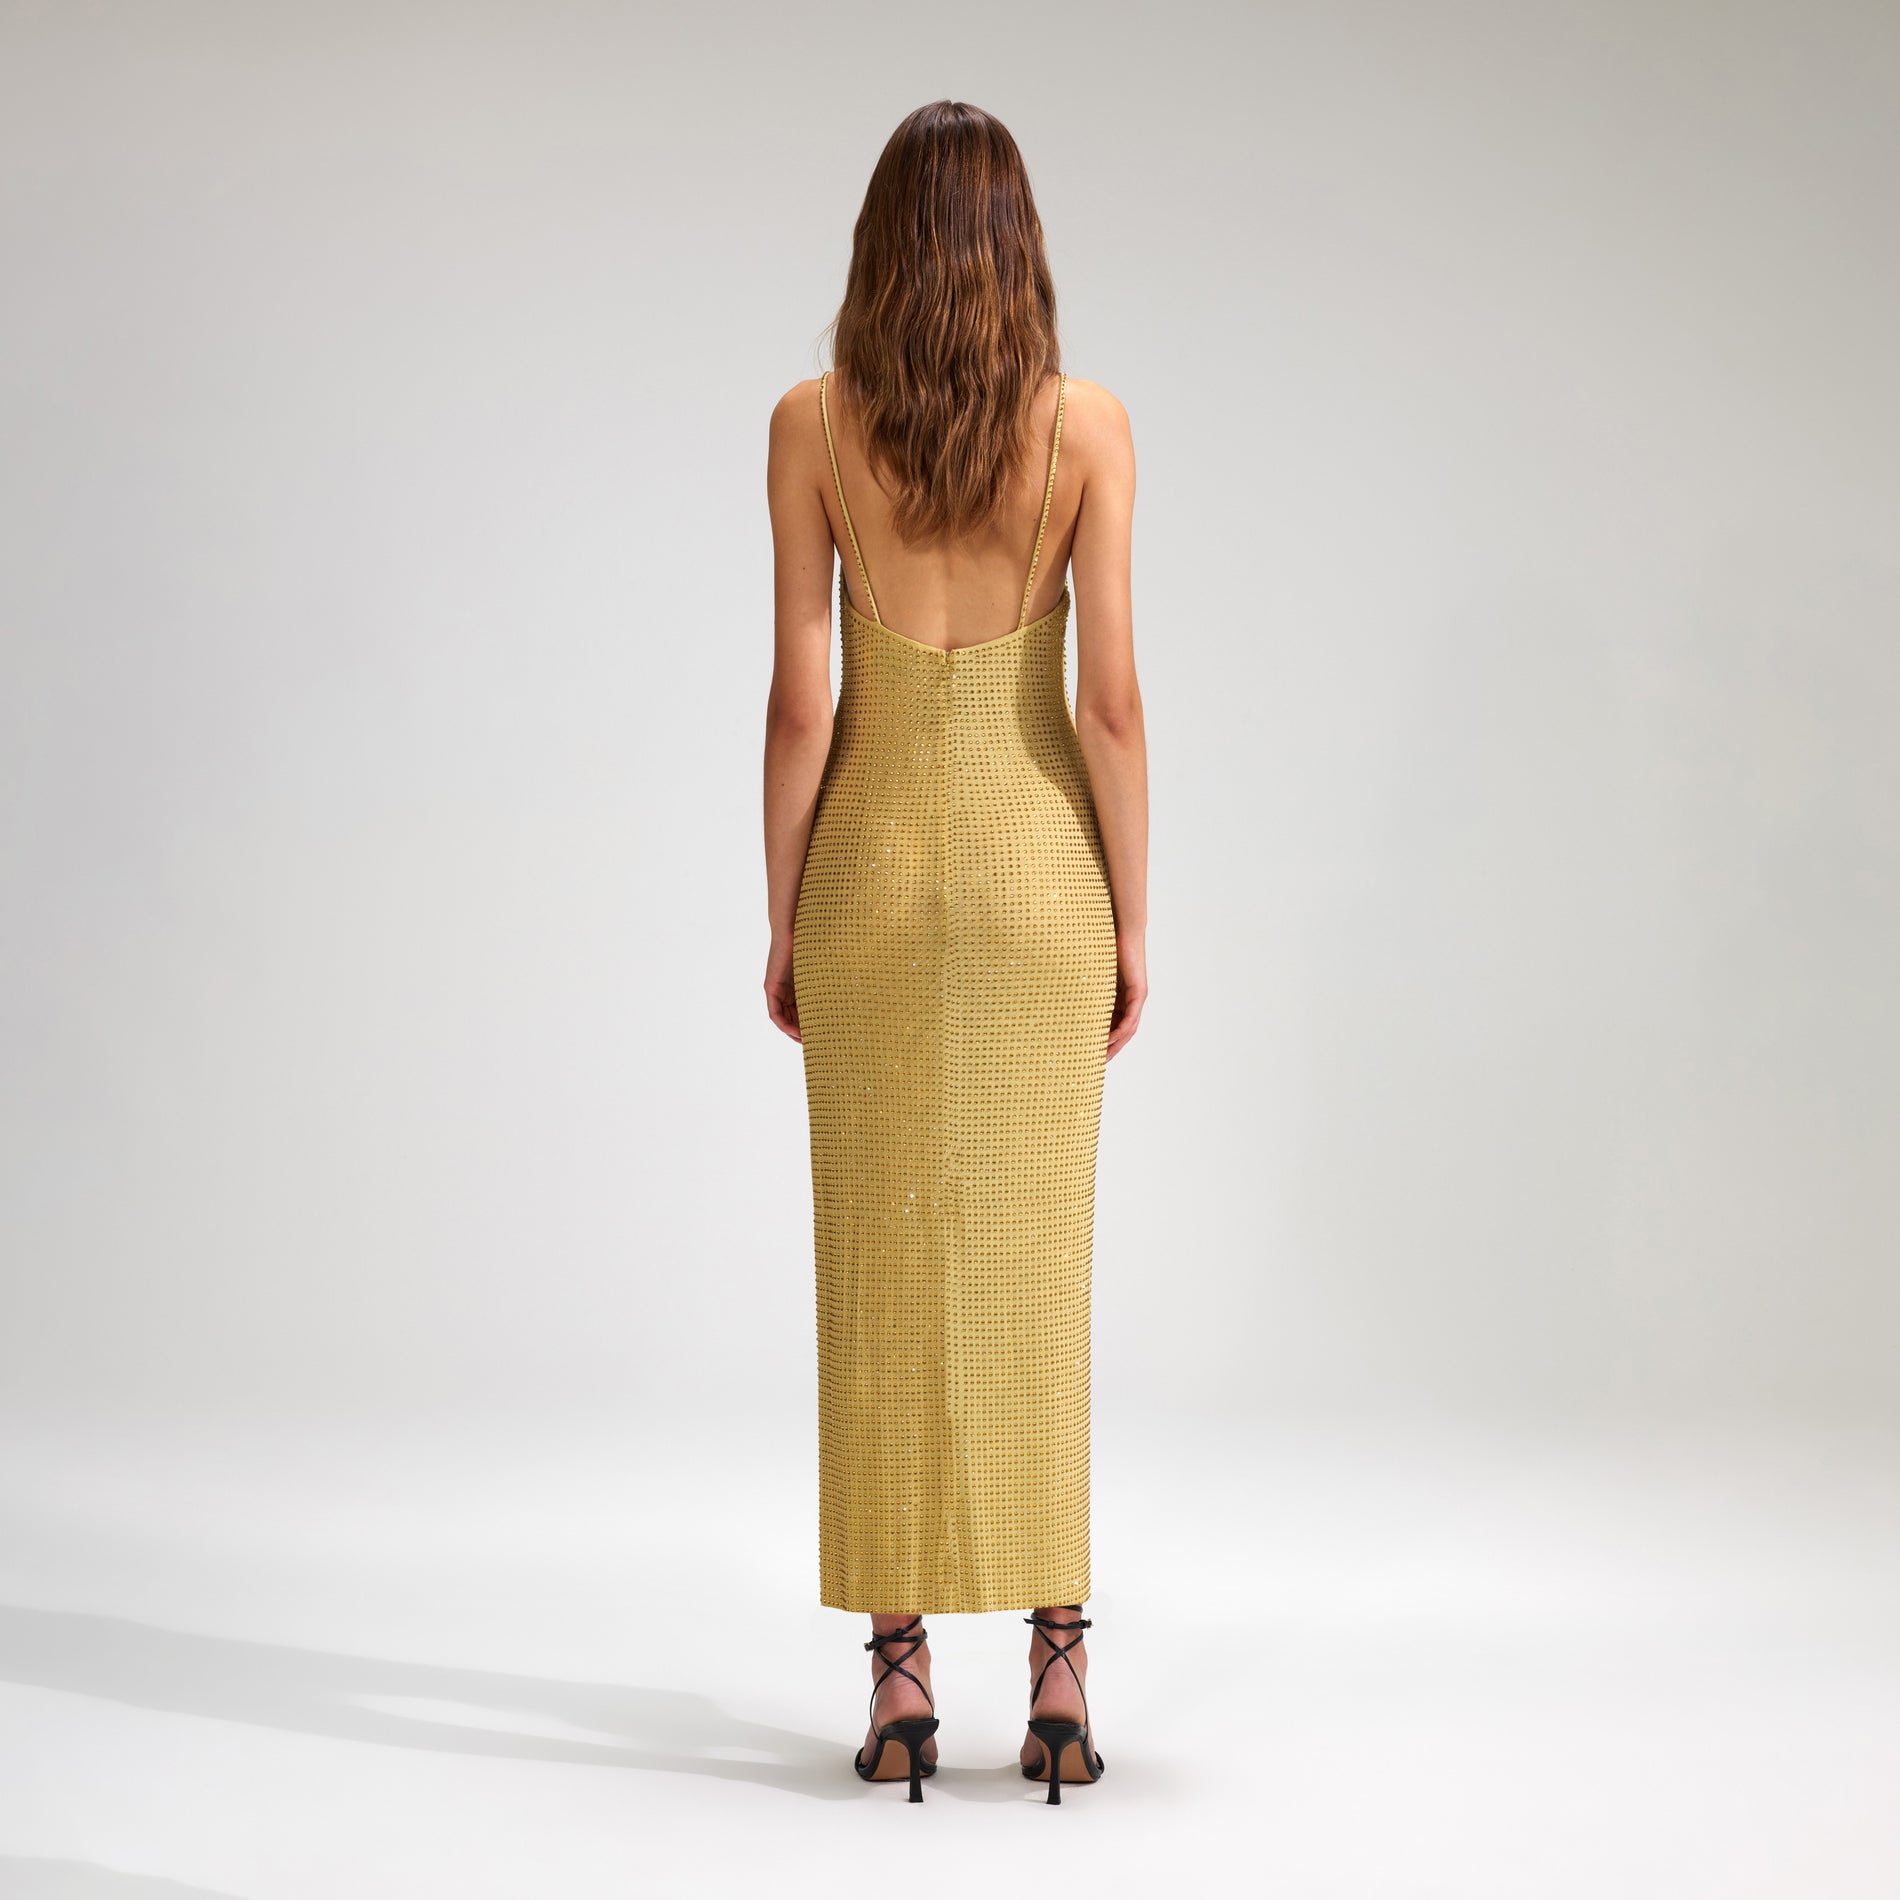 A woman wearing the Yellow Rhinestone Mesh Midi Dress